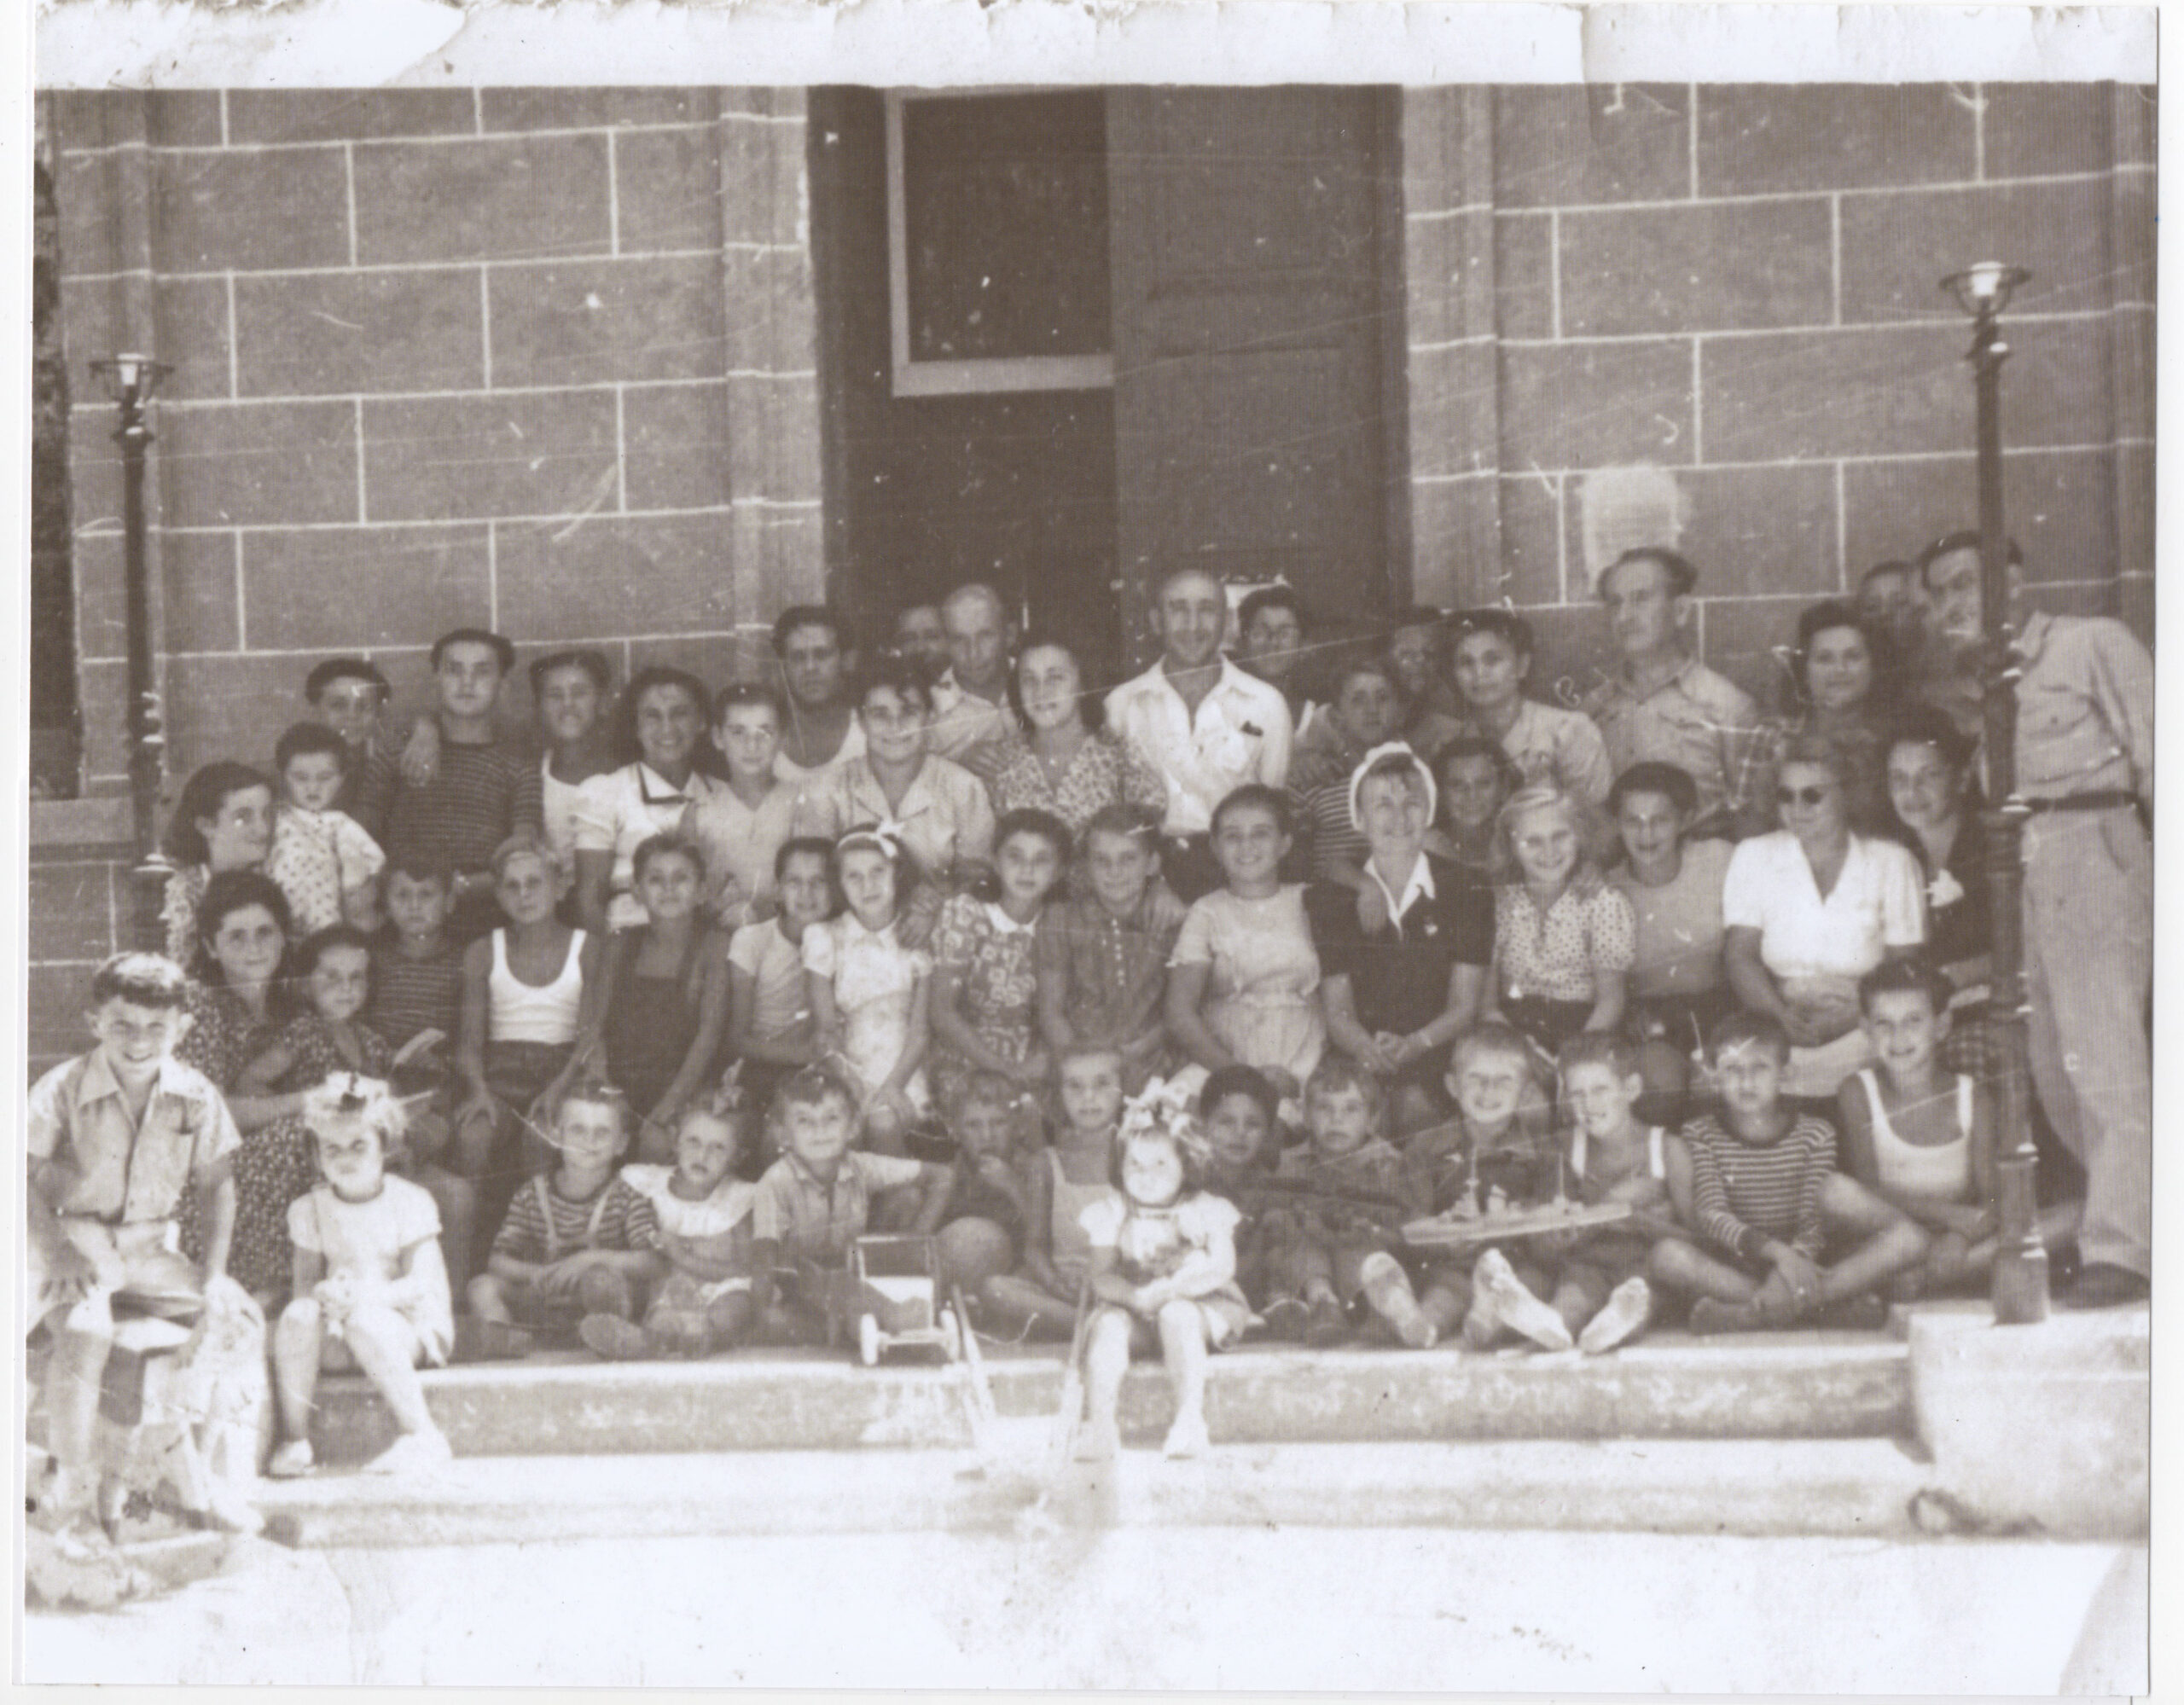 Hebrew school for DP children in Santa Maria di Leuca 1947 Ruth in middle white dress